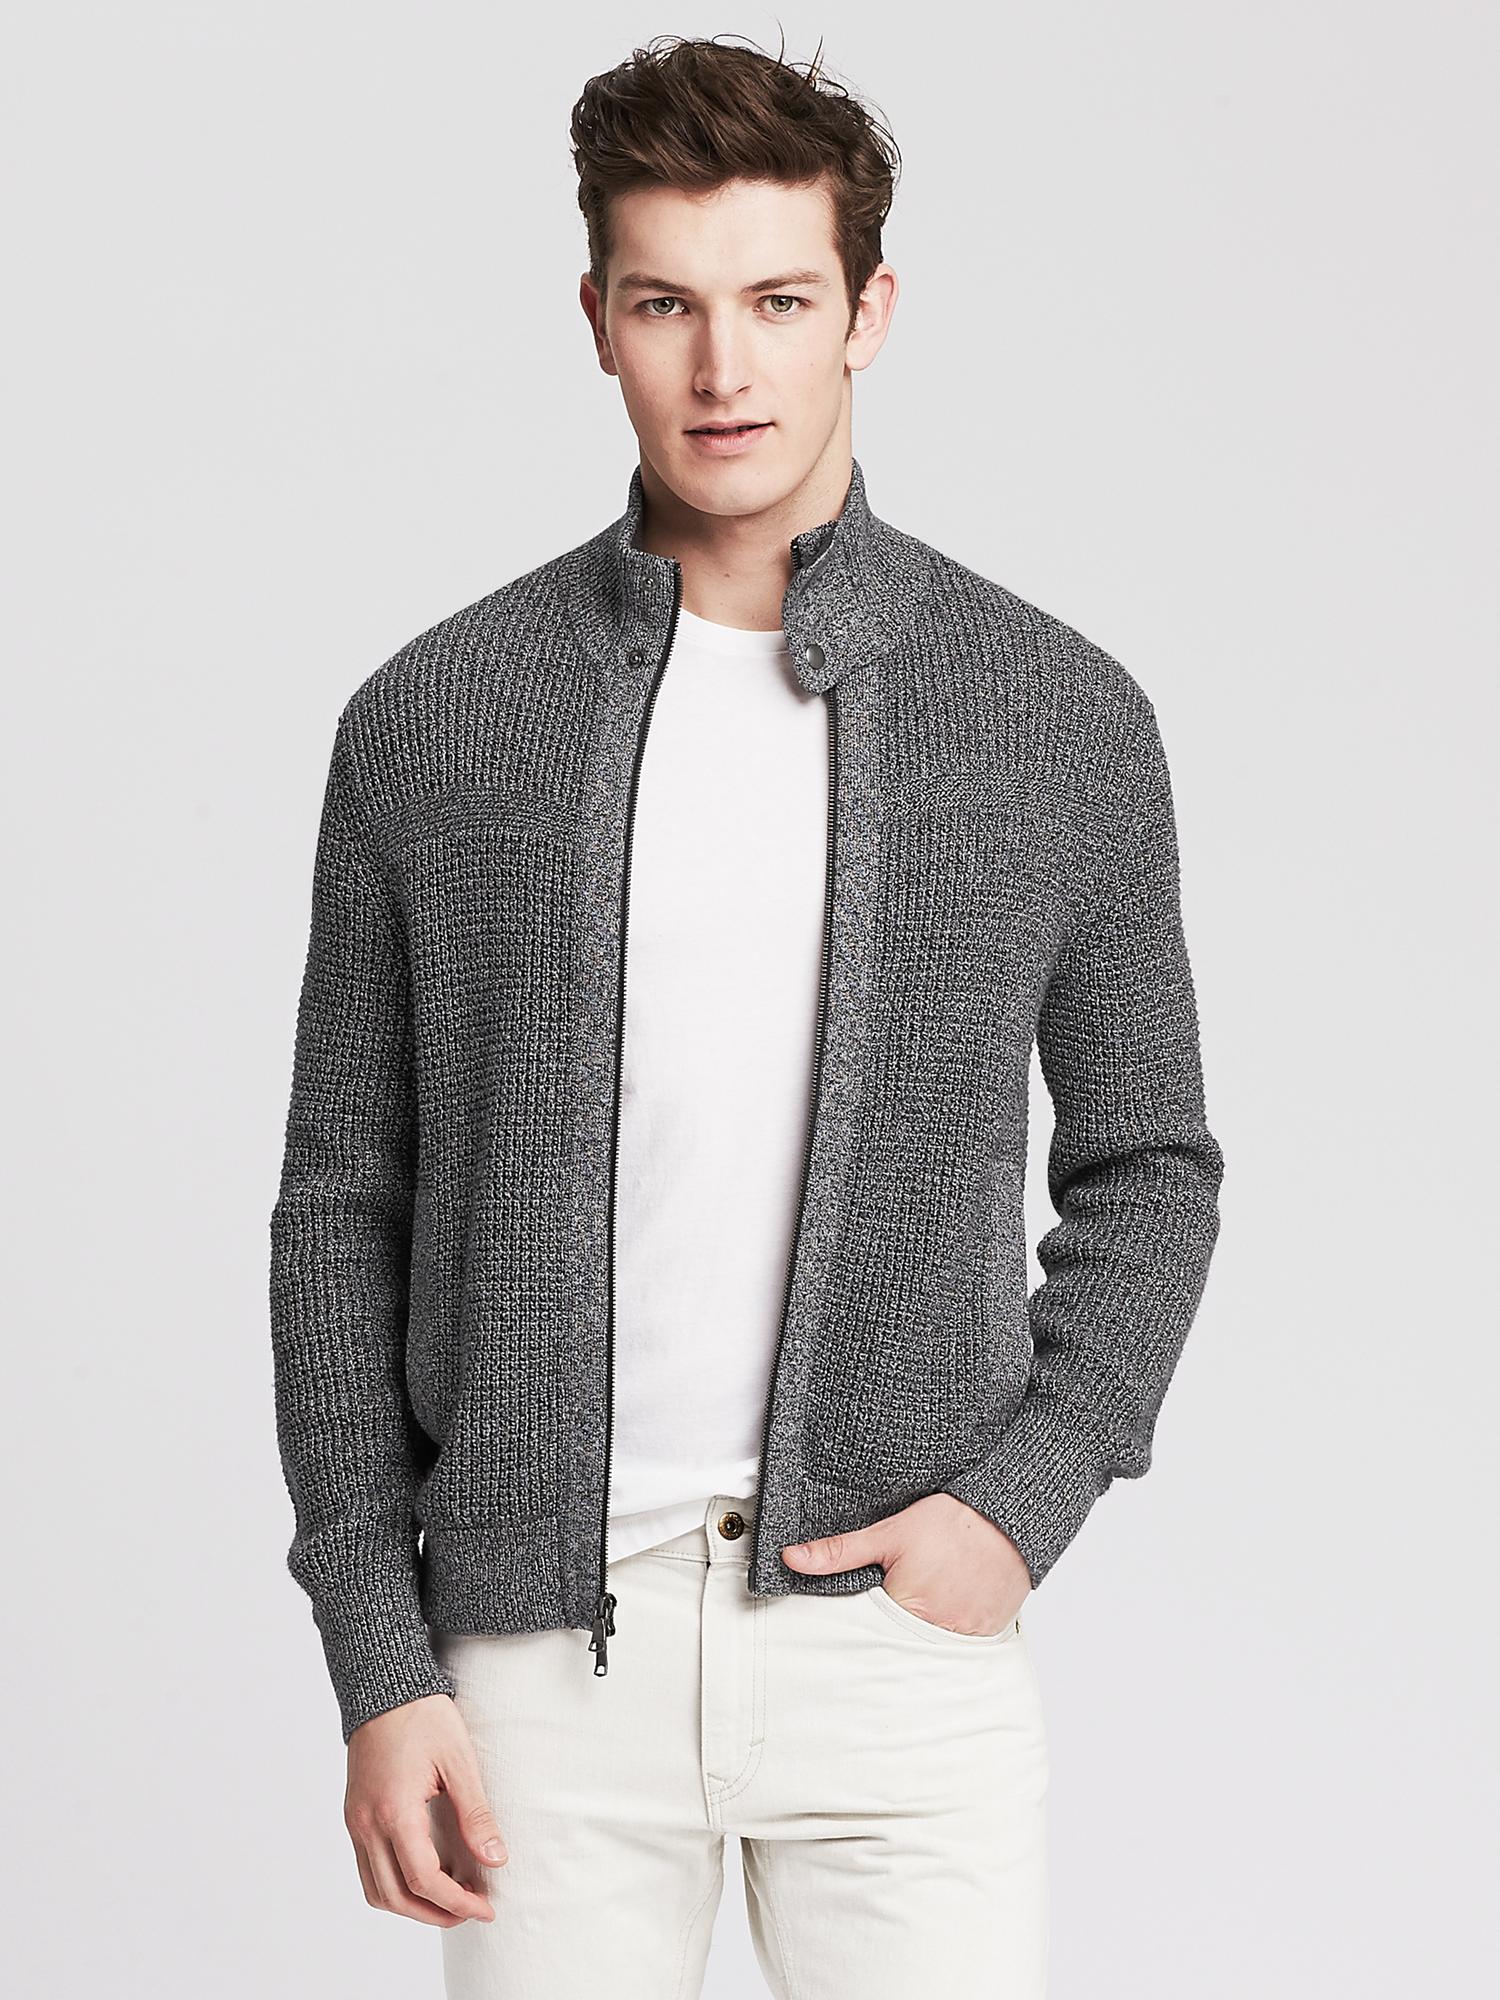 Four Pocket Textured Sweater Jacket, Banana Republic